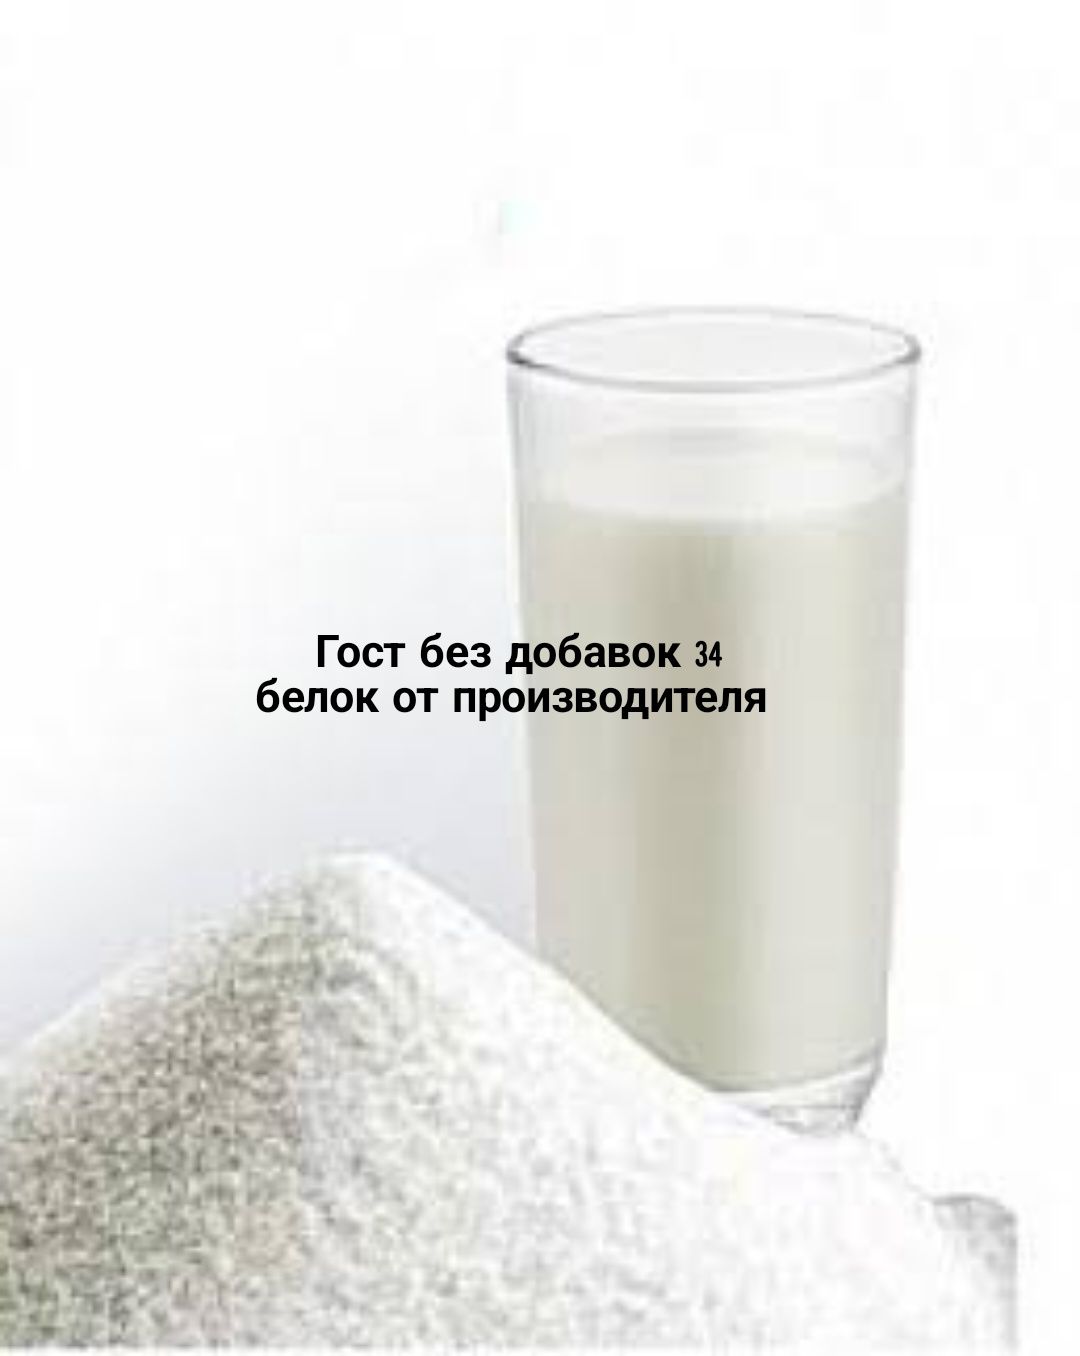 Сухое молоко  обезжиренное 1.5%,34 белка.сухе знежирене молоко 1.5%,